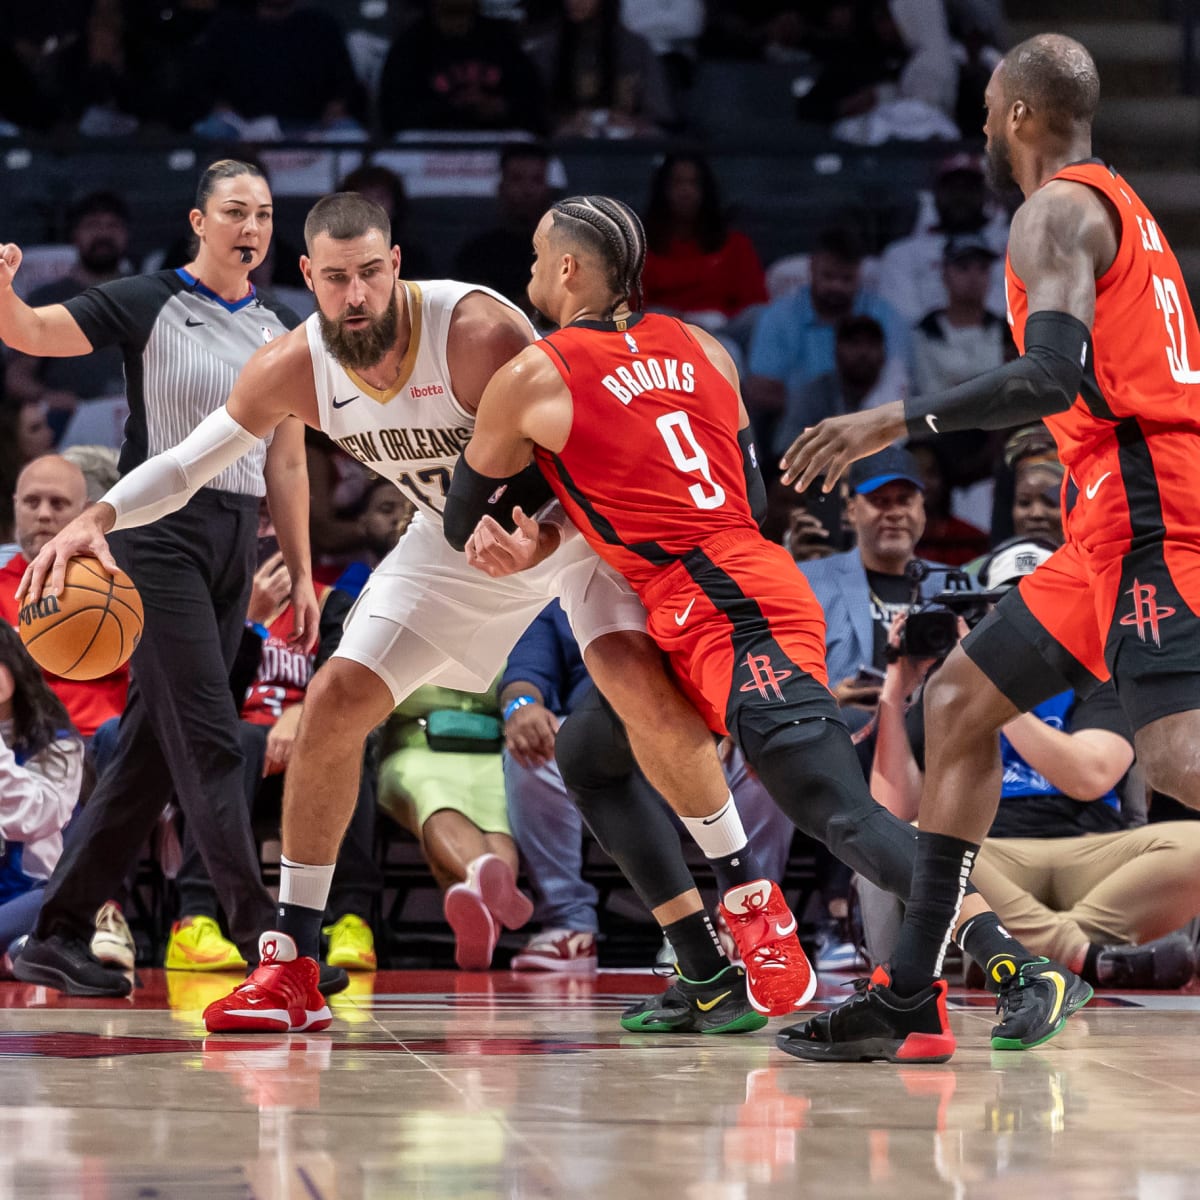 Houston Rockets: A promising win over Atlanta thanks to defense